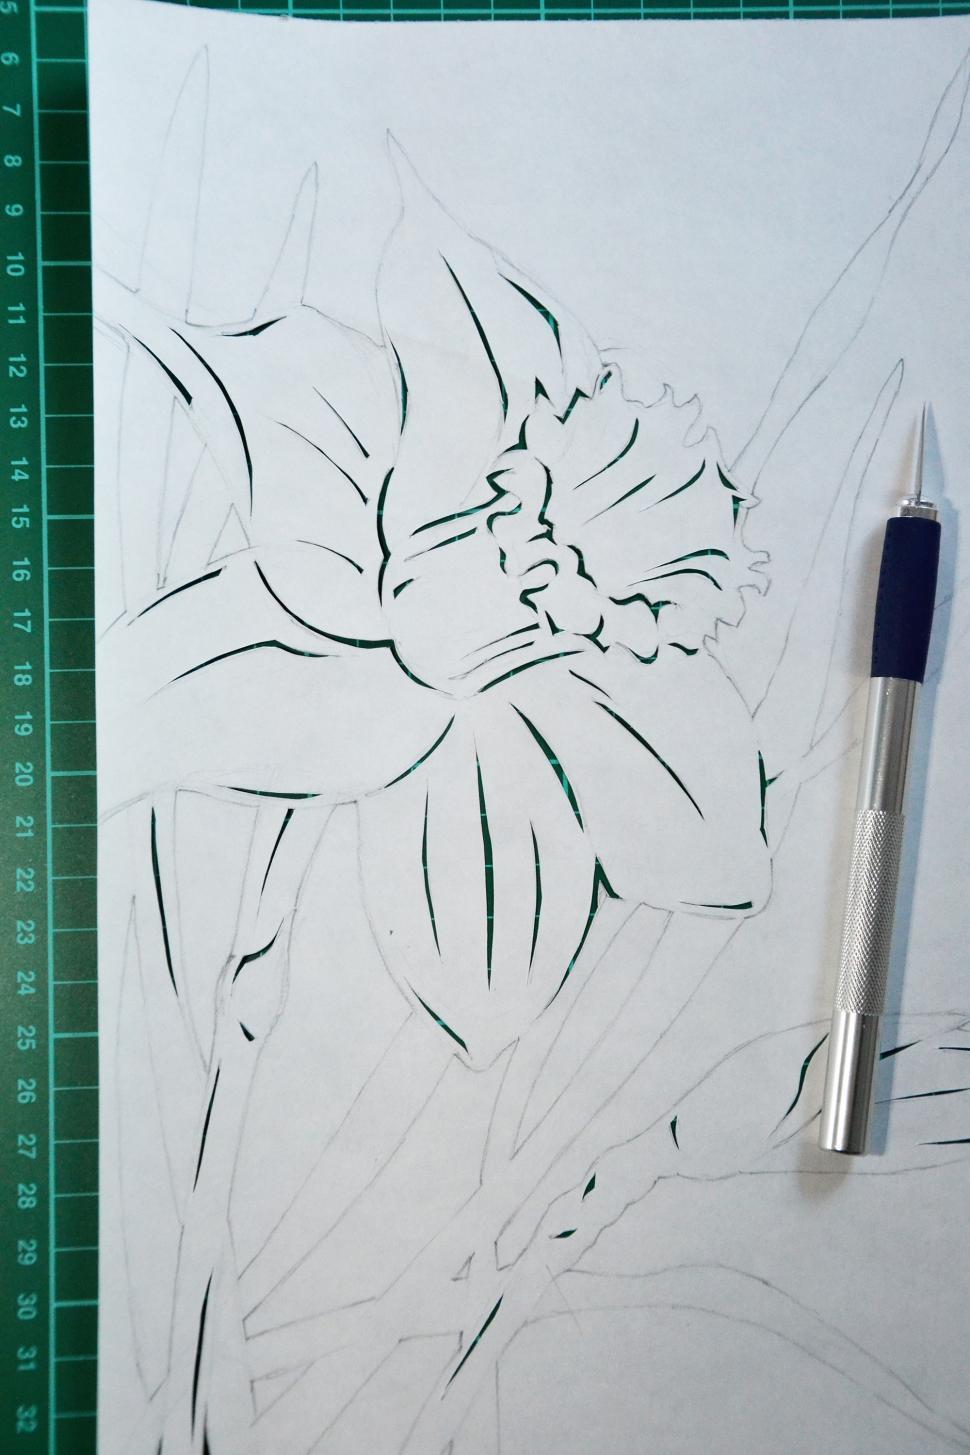 Free Image of Daffodil paper cutting 